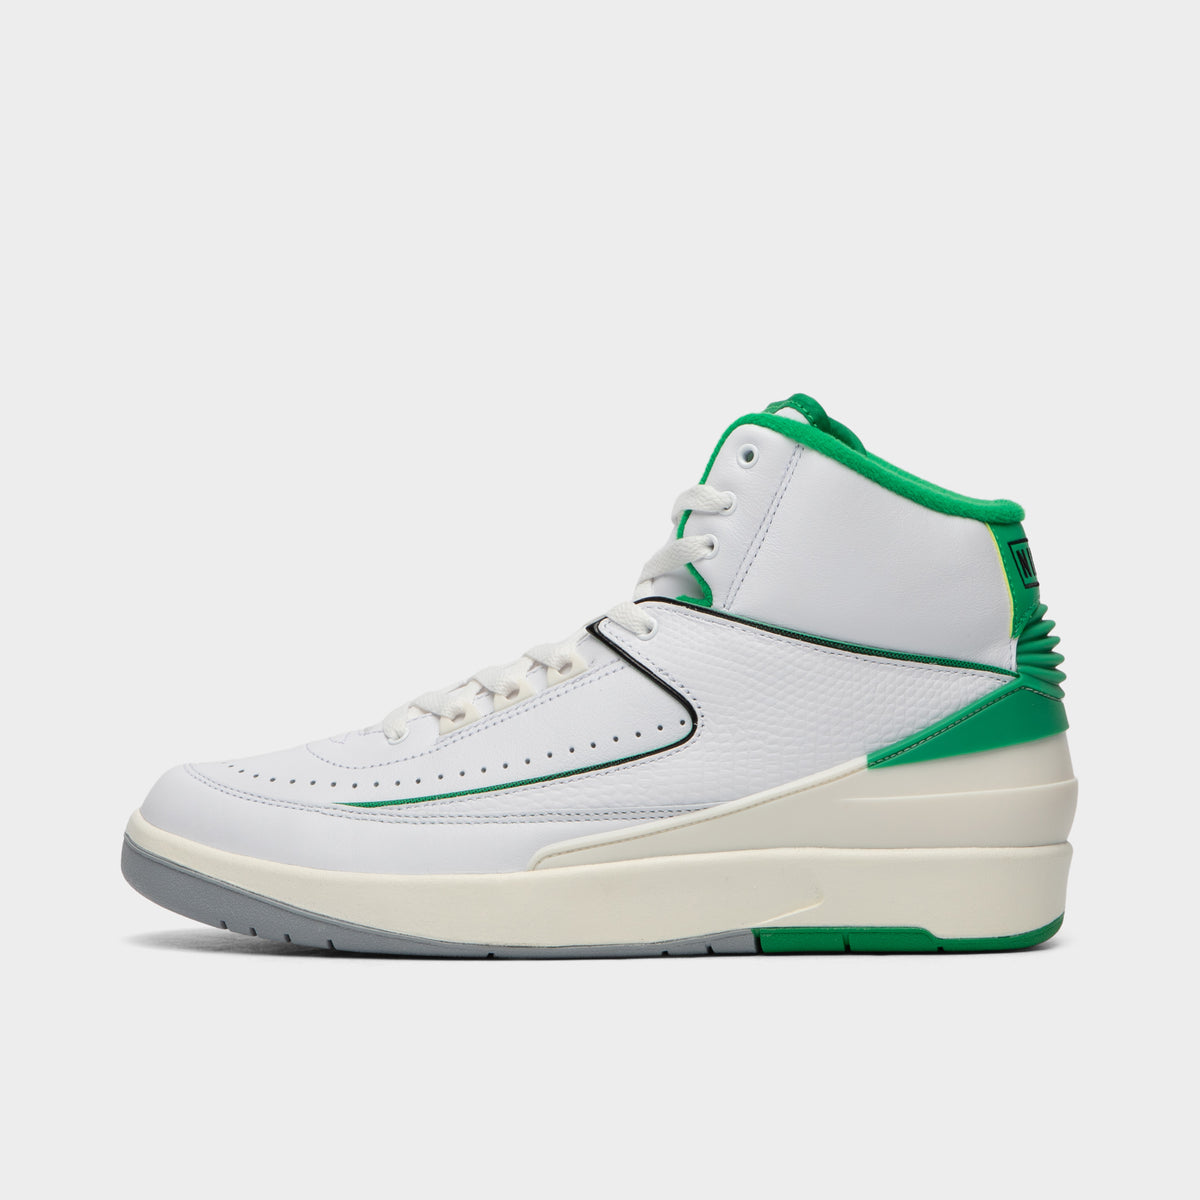 Jordan 2 Retro White / Lucky Green | JD Sports